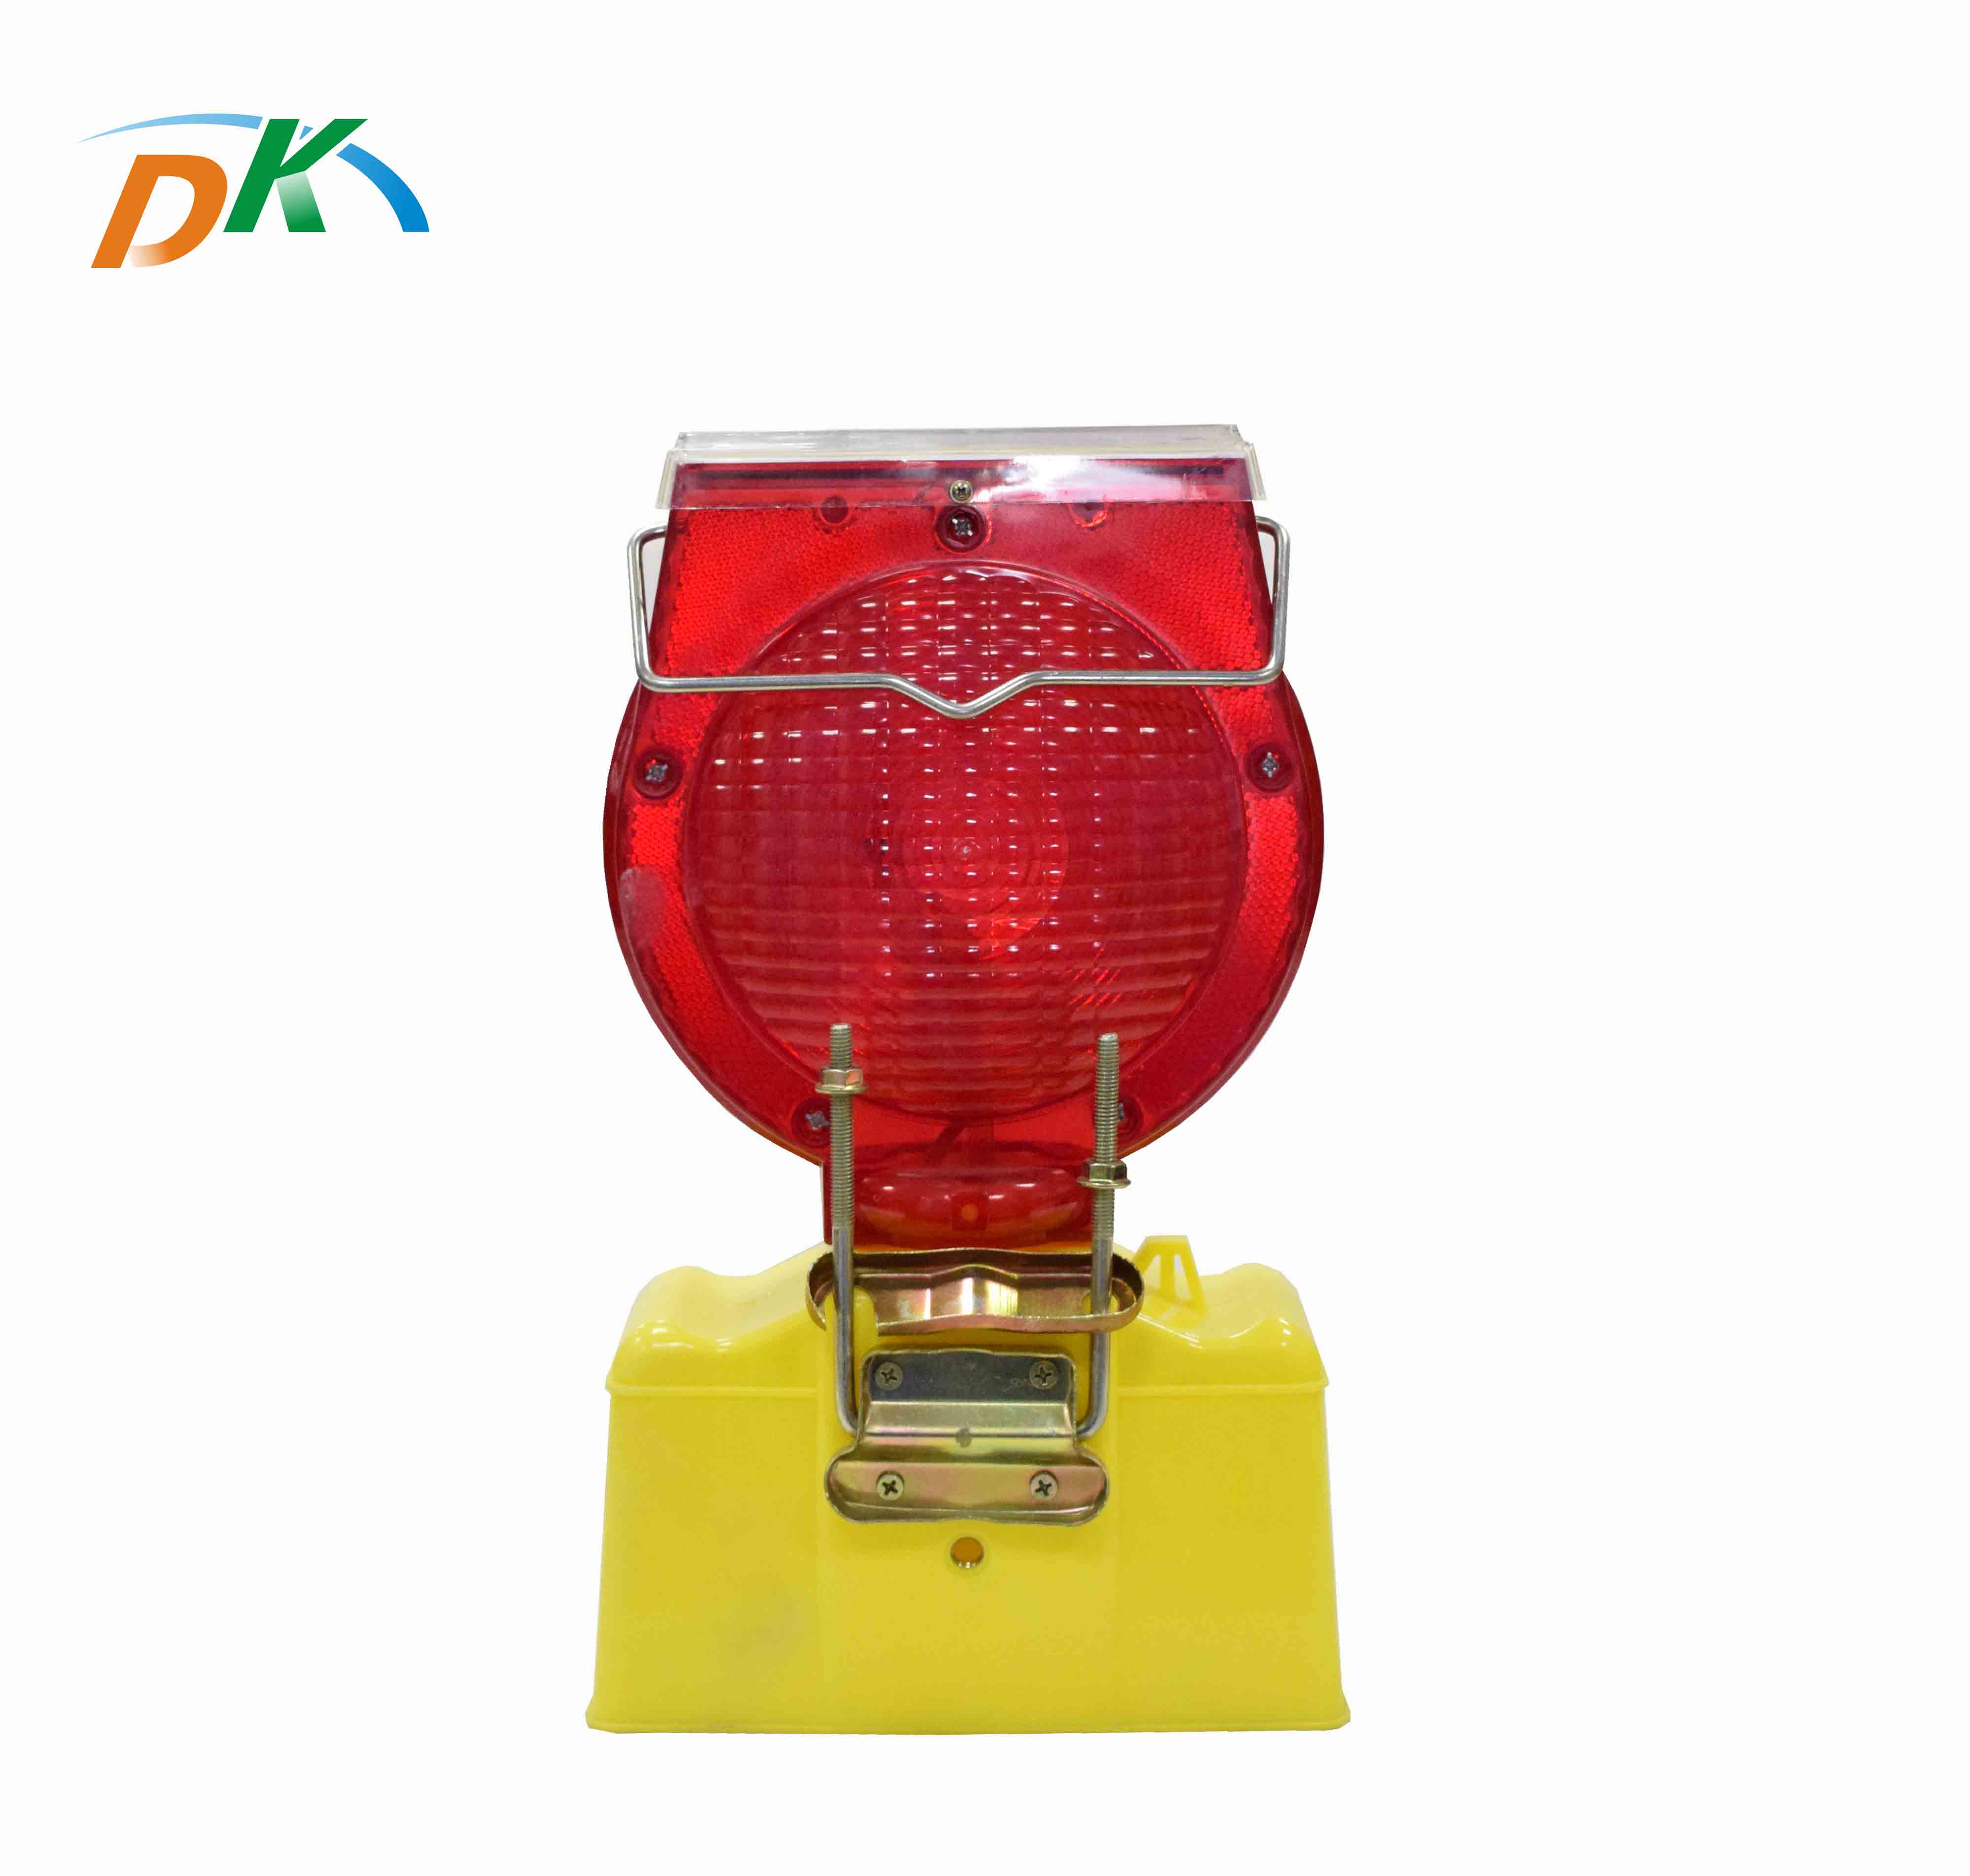 DK LED Outdoor Waterproof PC Material Traffic LED Flashing Barricade Warning Light